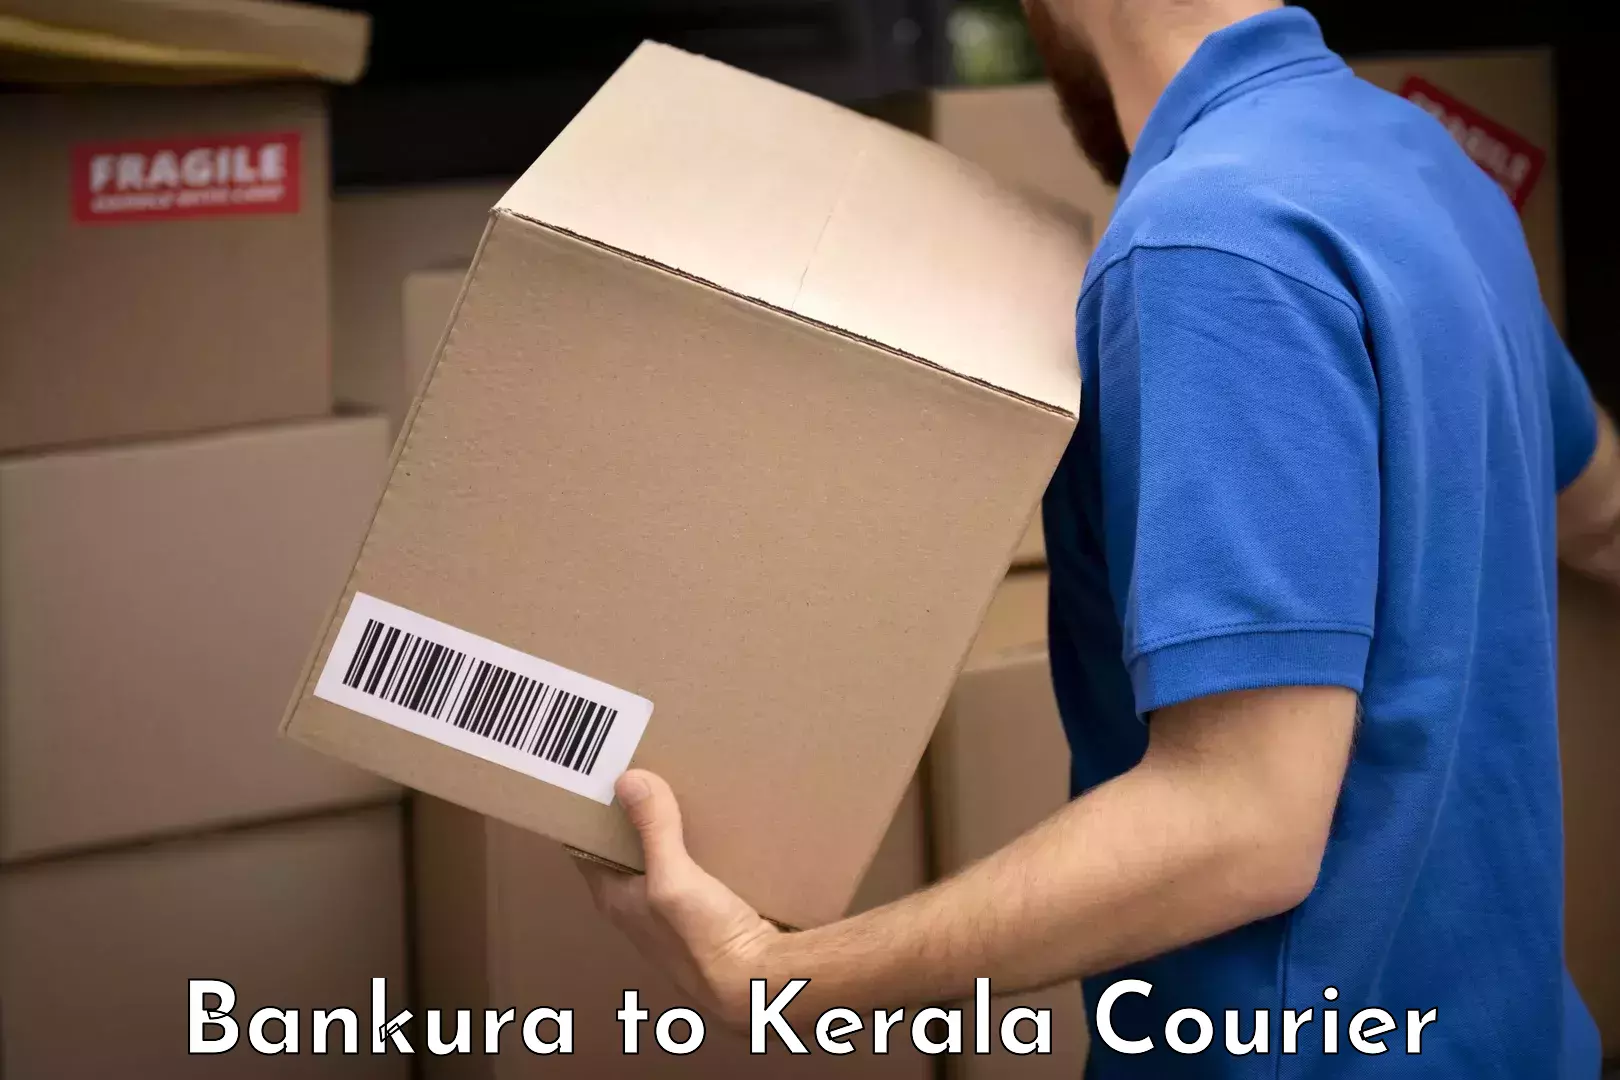 Luggage transport company Bankura to Kerala